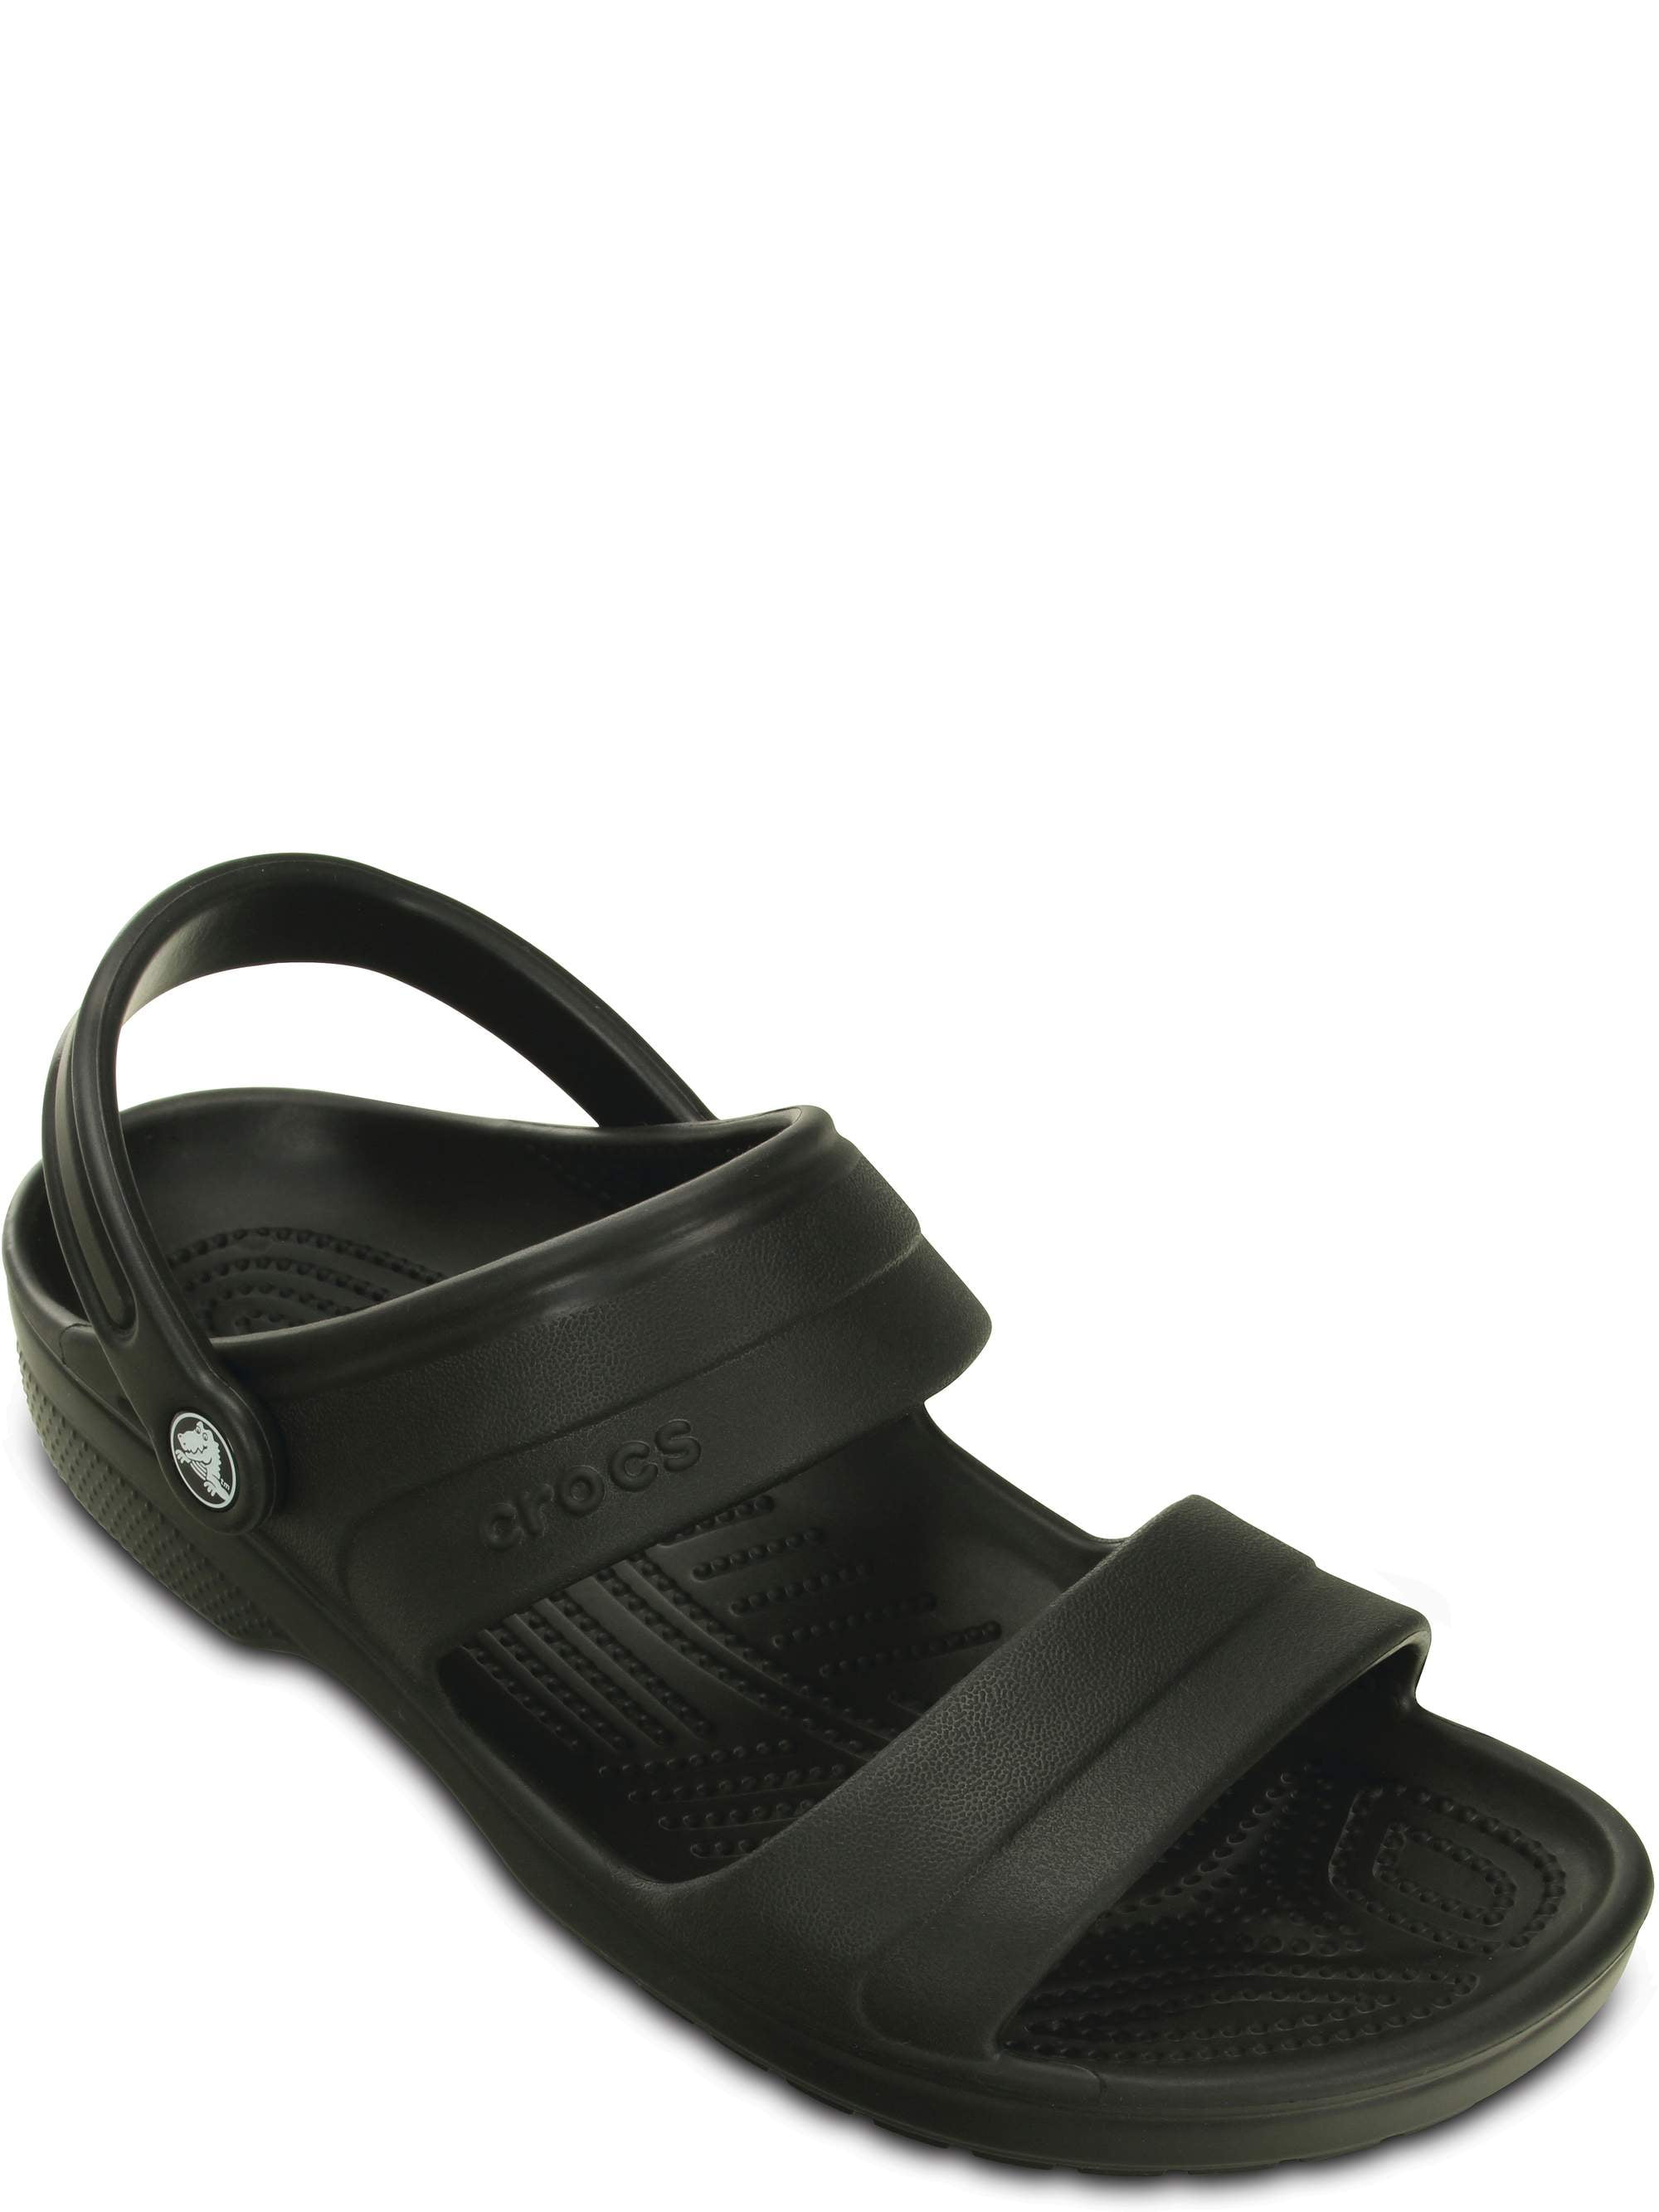 crocs unisex classic sandal